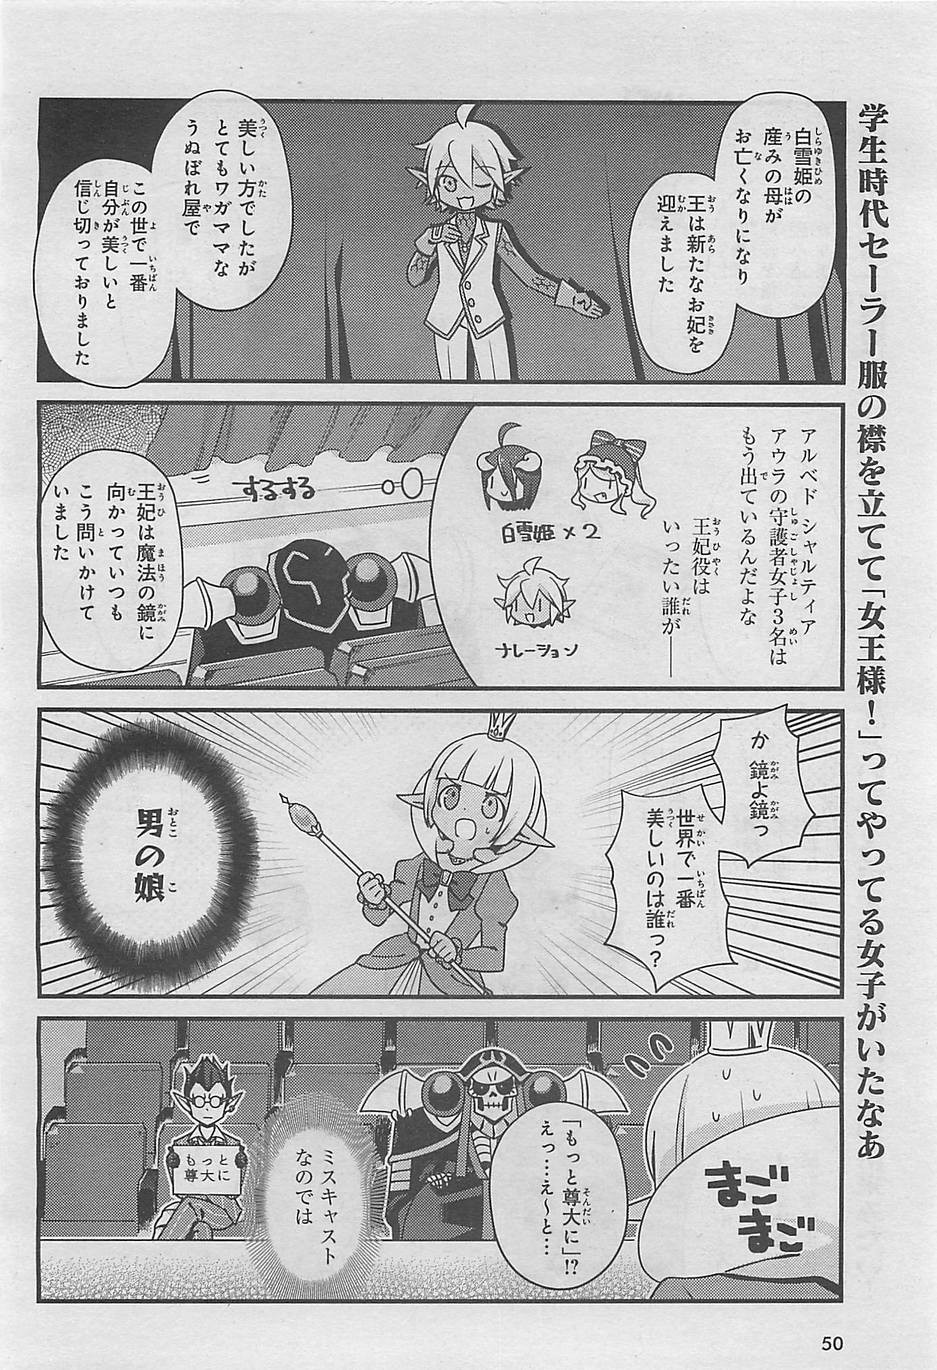 Overlord-Fushisha-no-Oh - Chapter 03 - Page 6